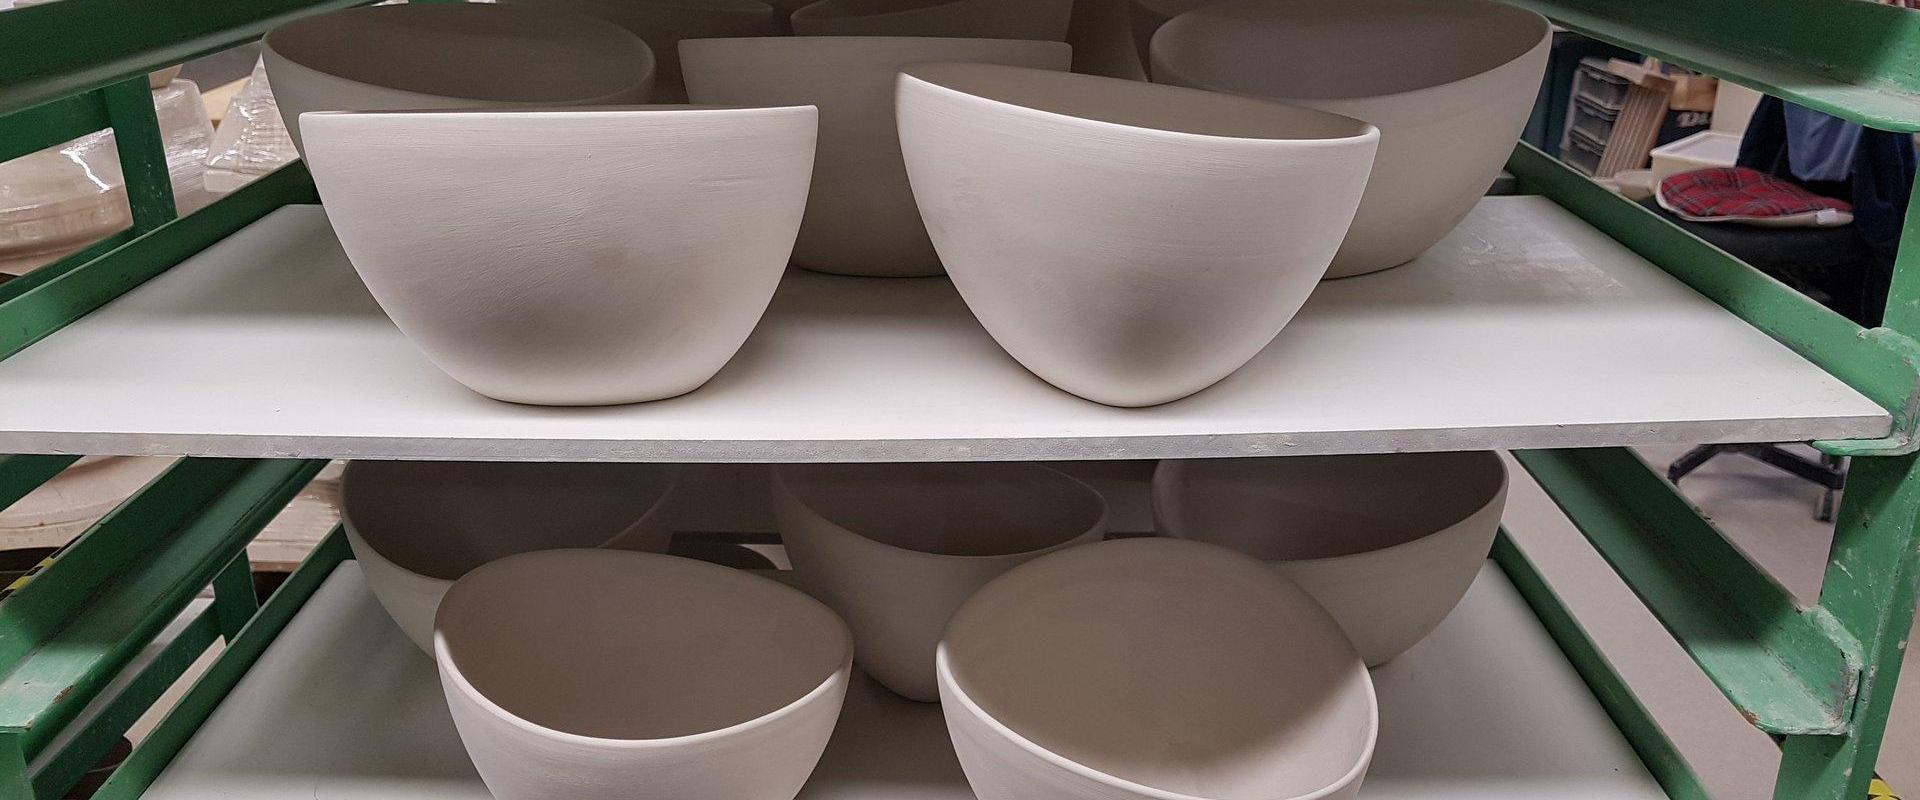 handmade-estonian-ceramics-bowls-kaussid